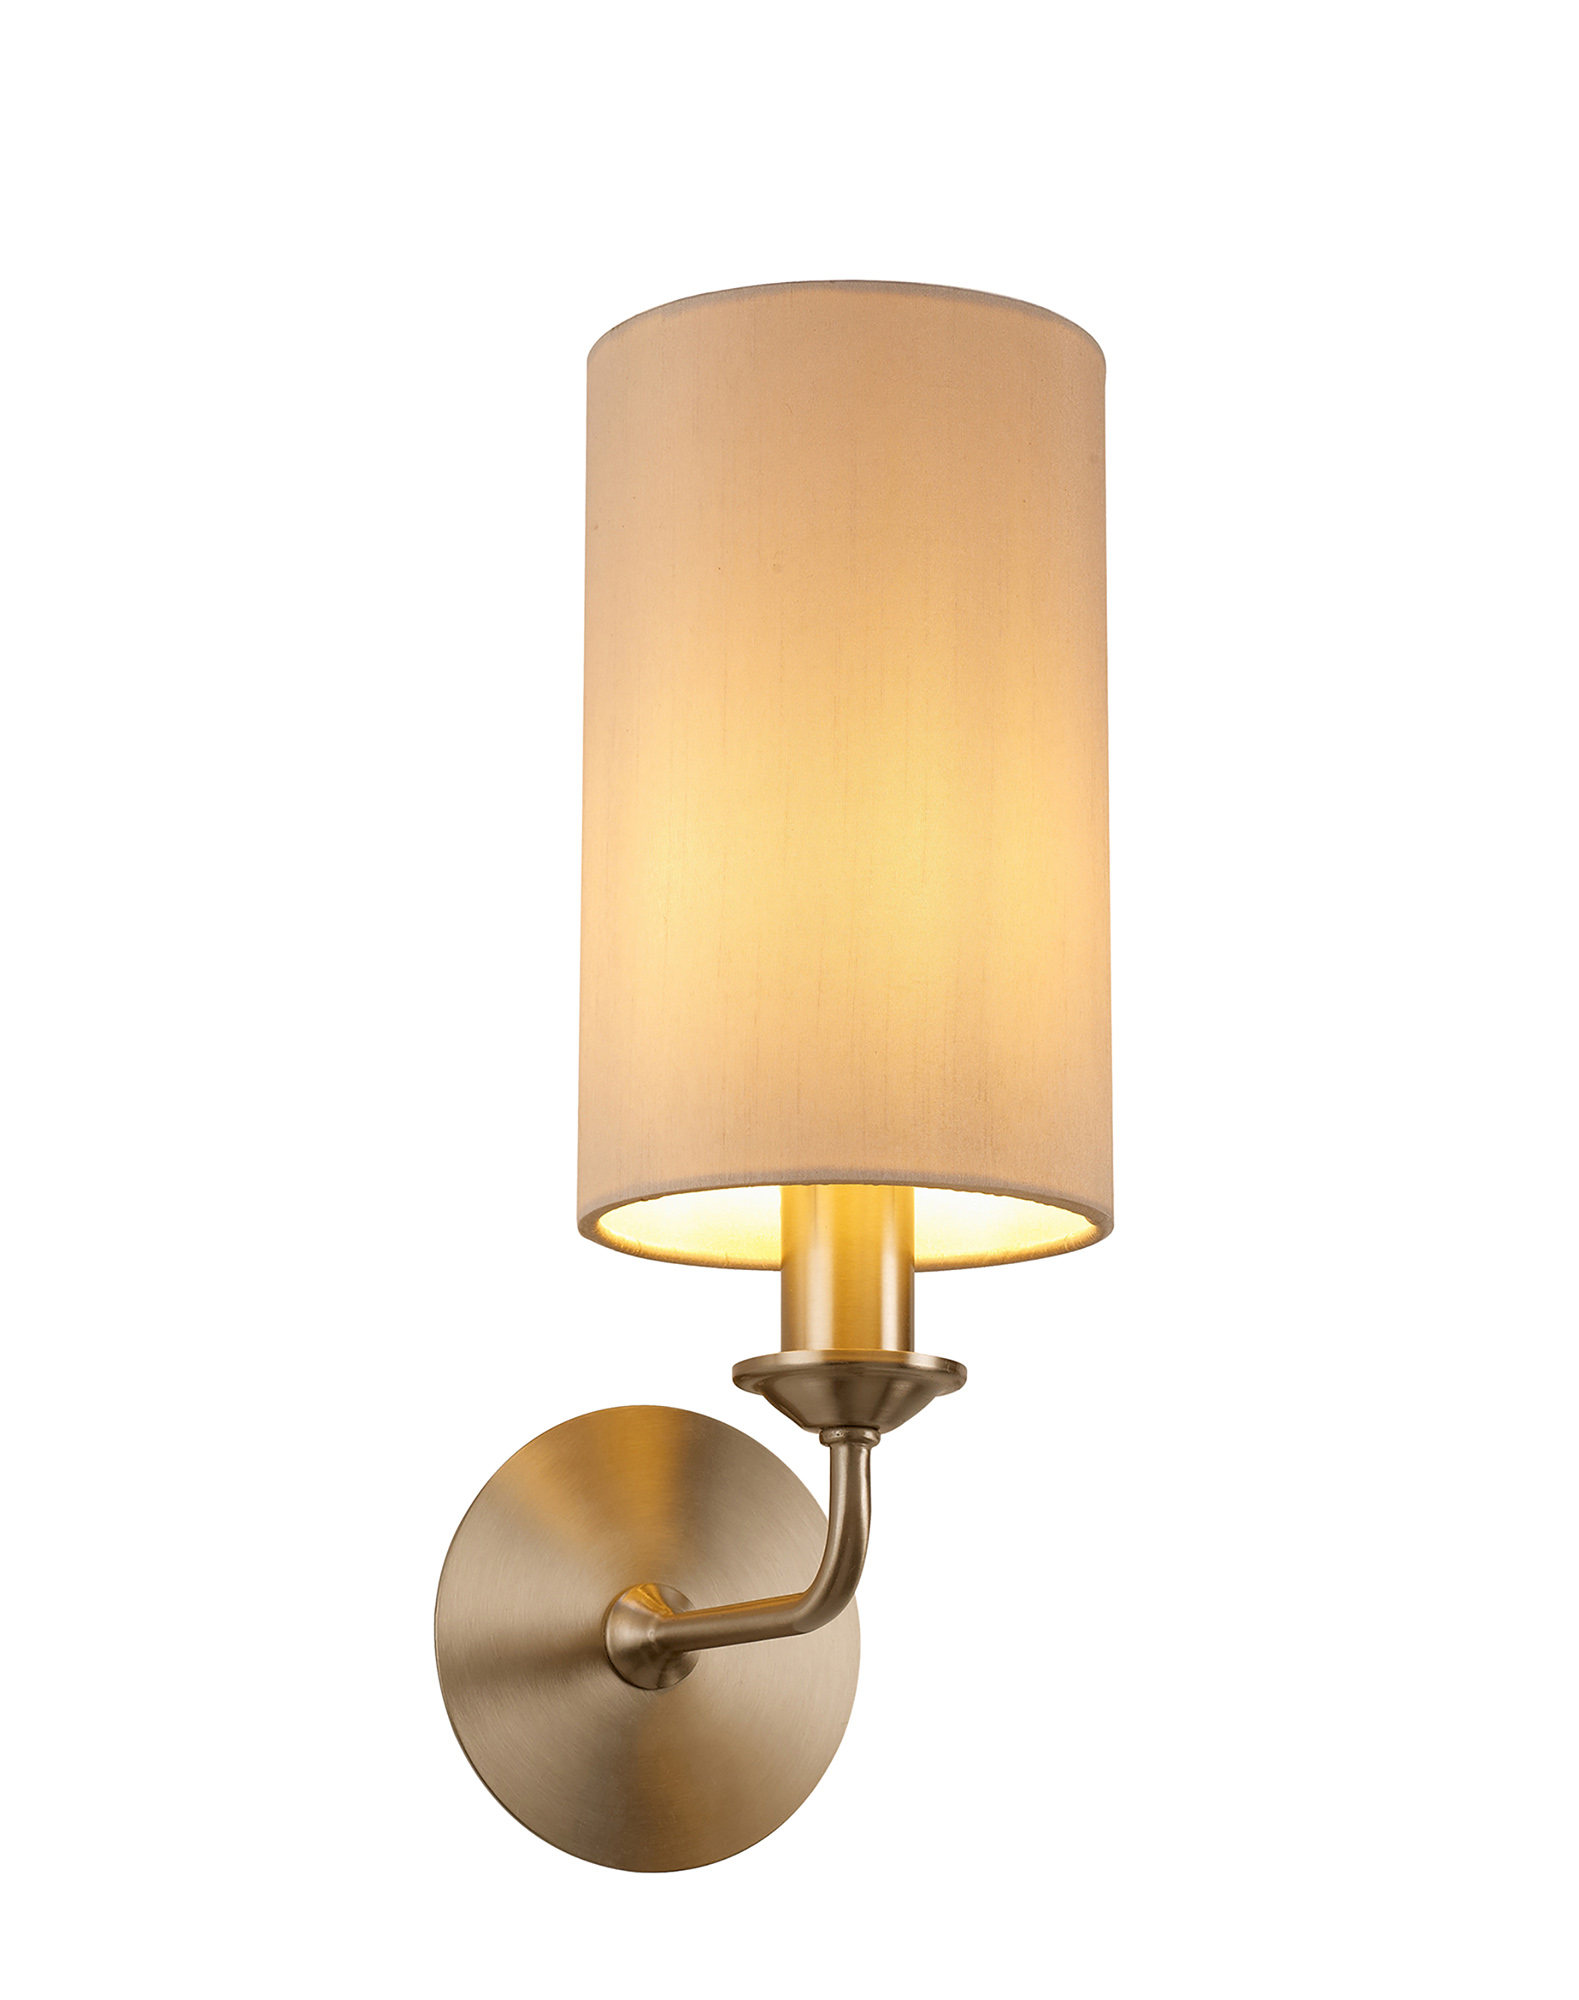 DK0067  Banyan Wall Lamp 1 Light